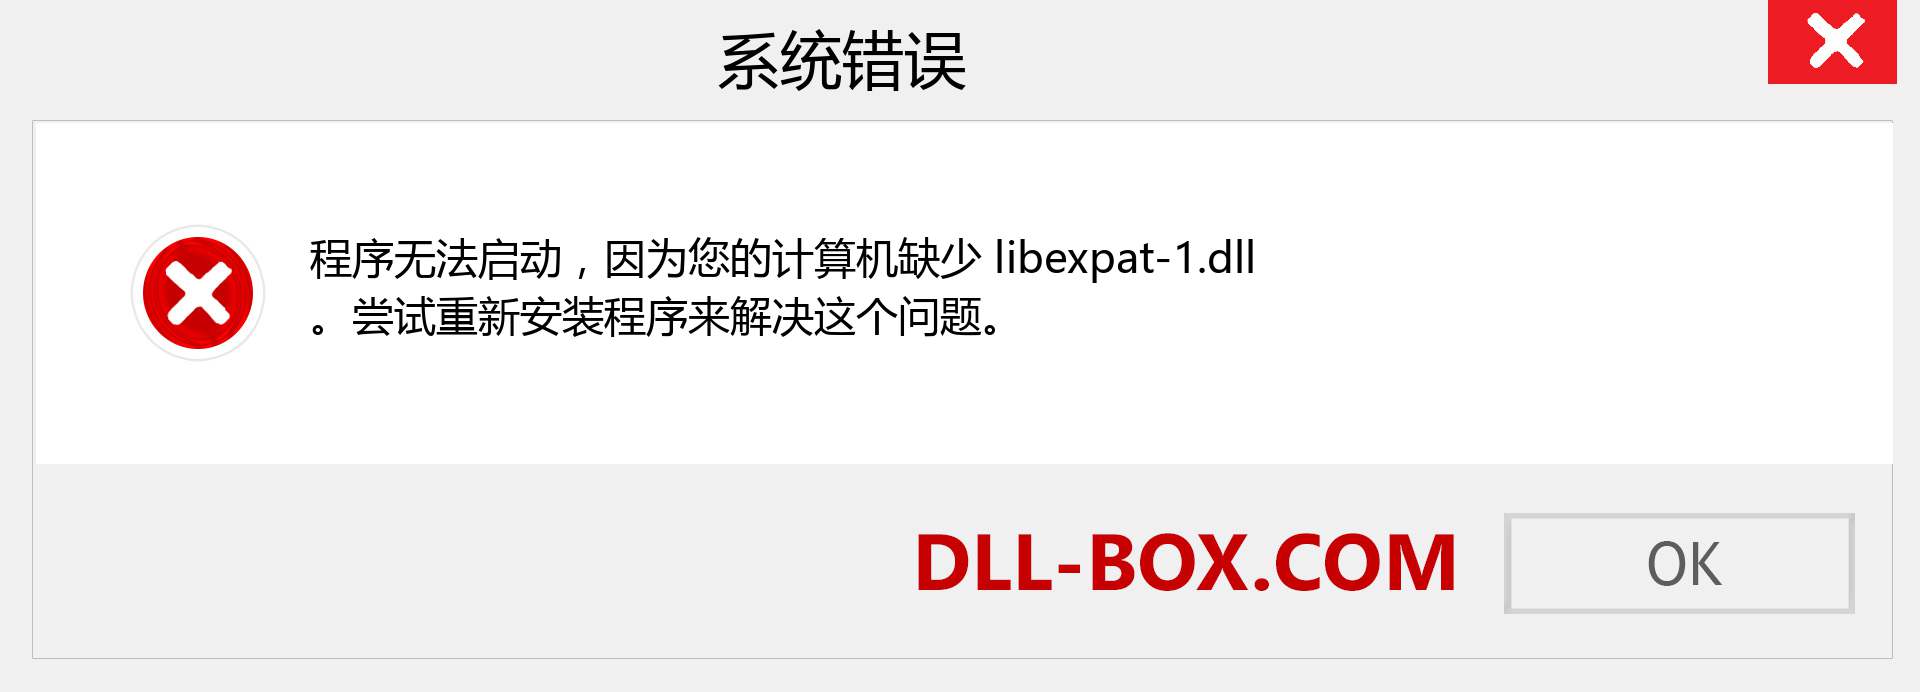 libexpat-1.dll 文件丢失？。 适用于 Windows 7、8、10 的下载 - 修复 Windows、照片、图像上的 libexpat-1 dll 丢失错误